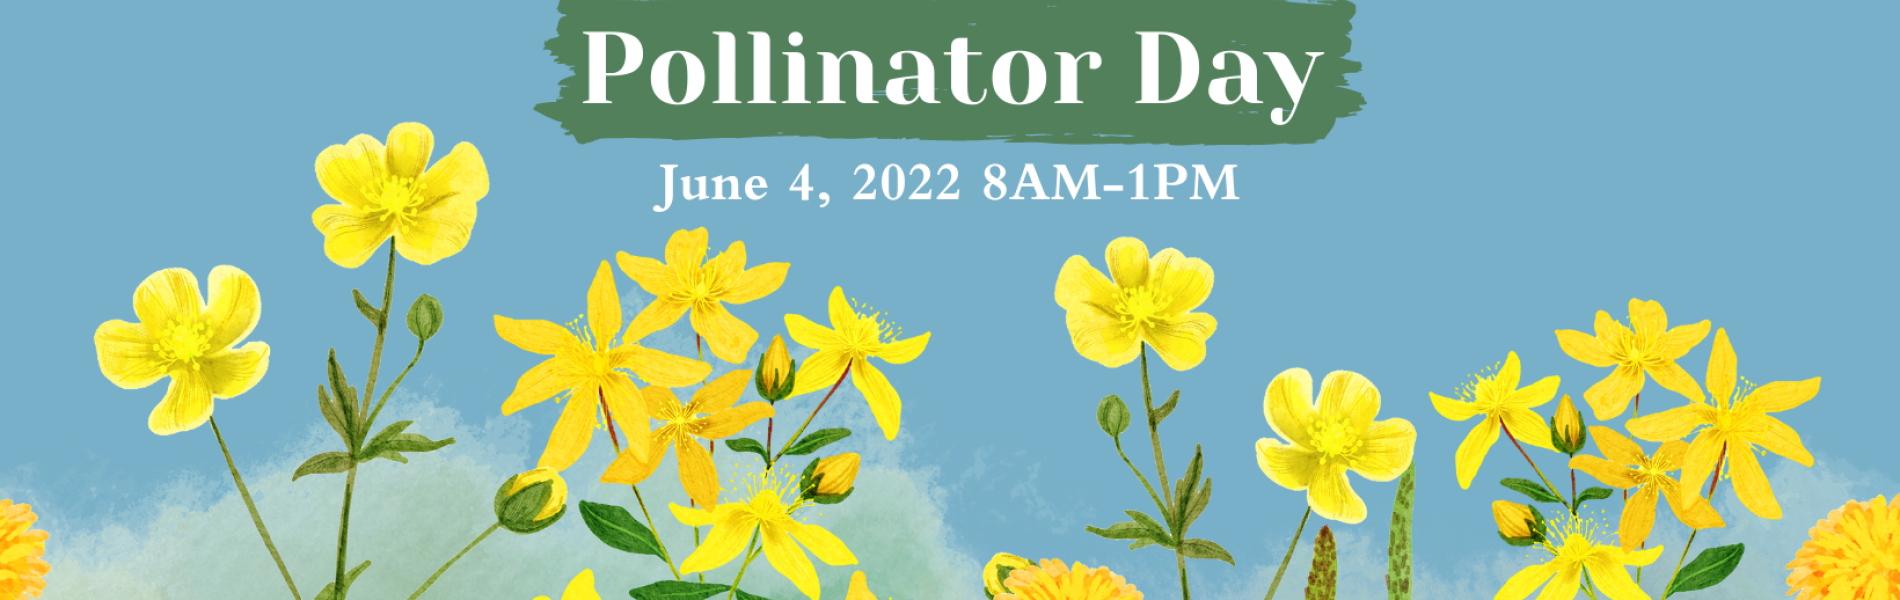 pollinator day